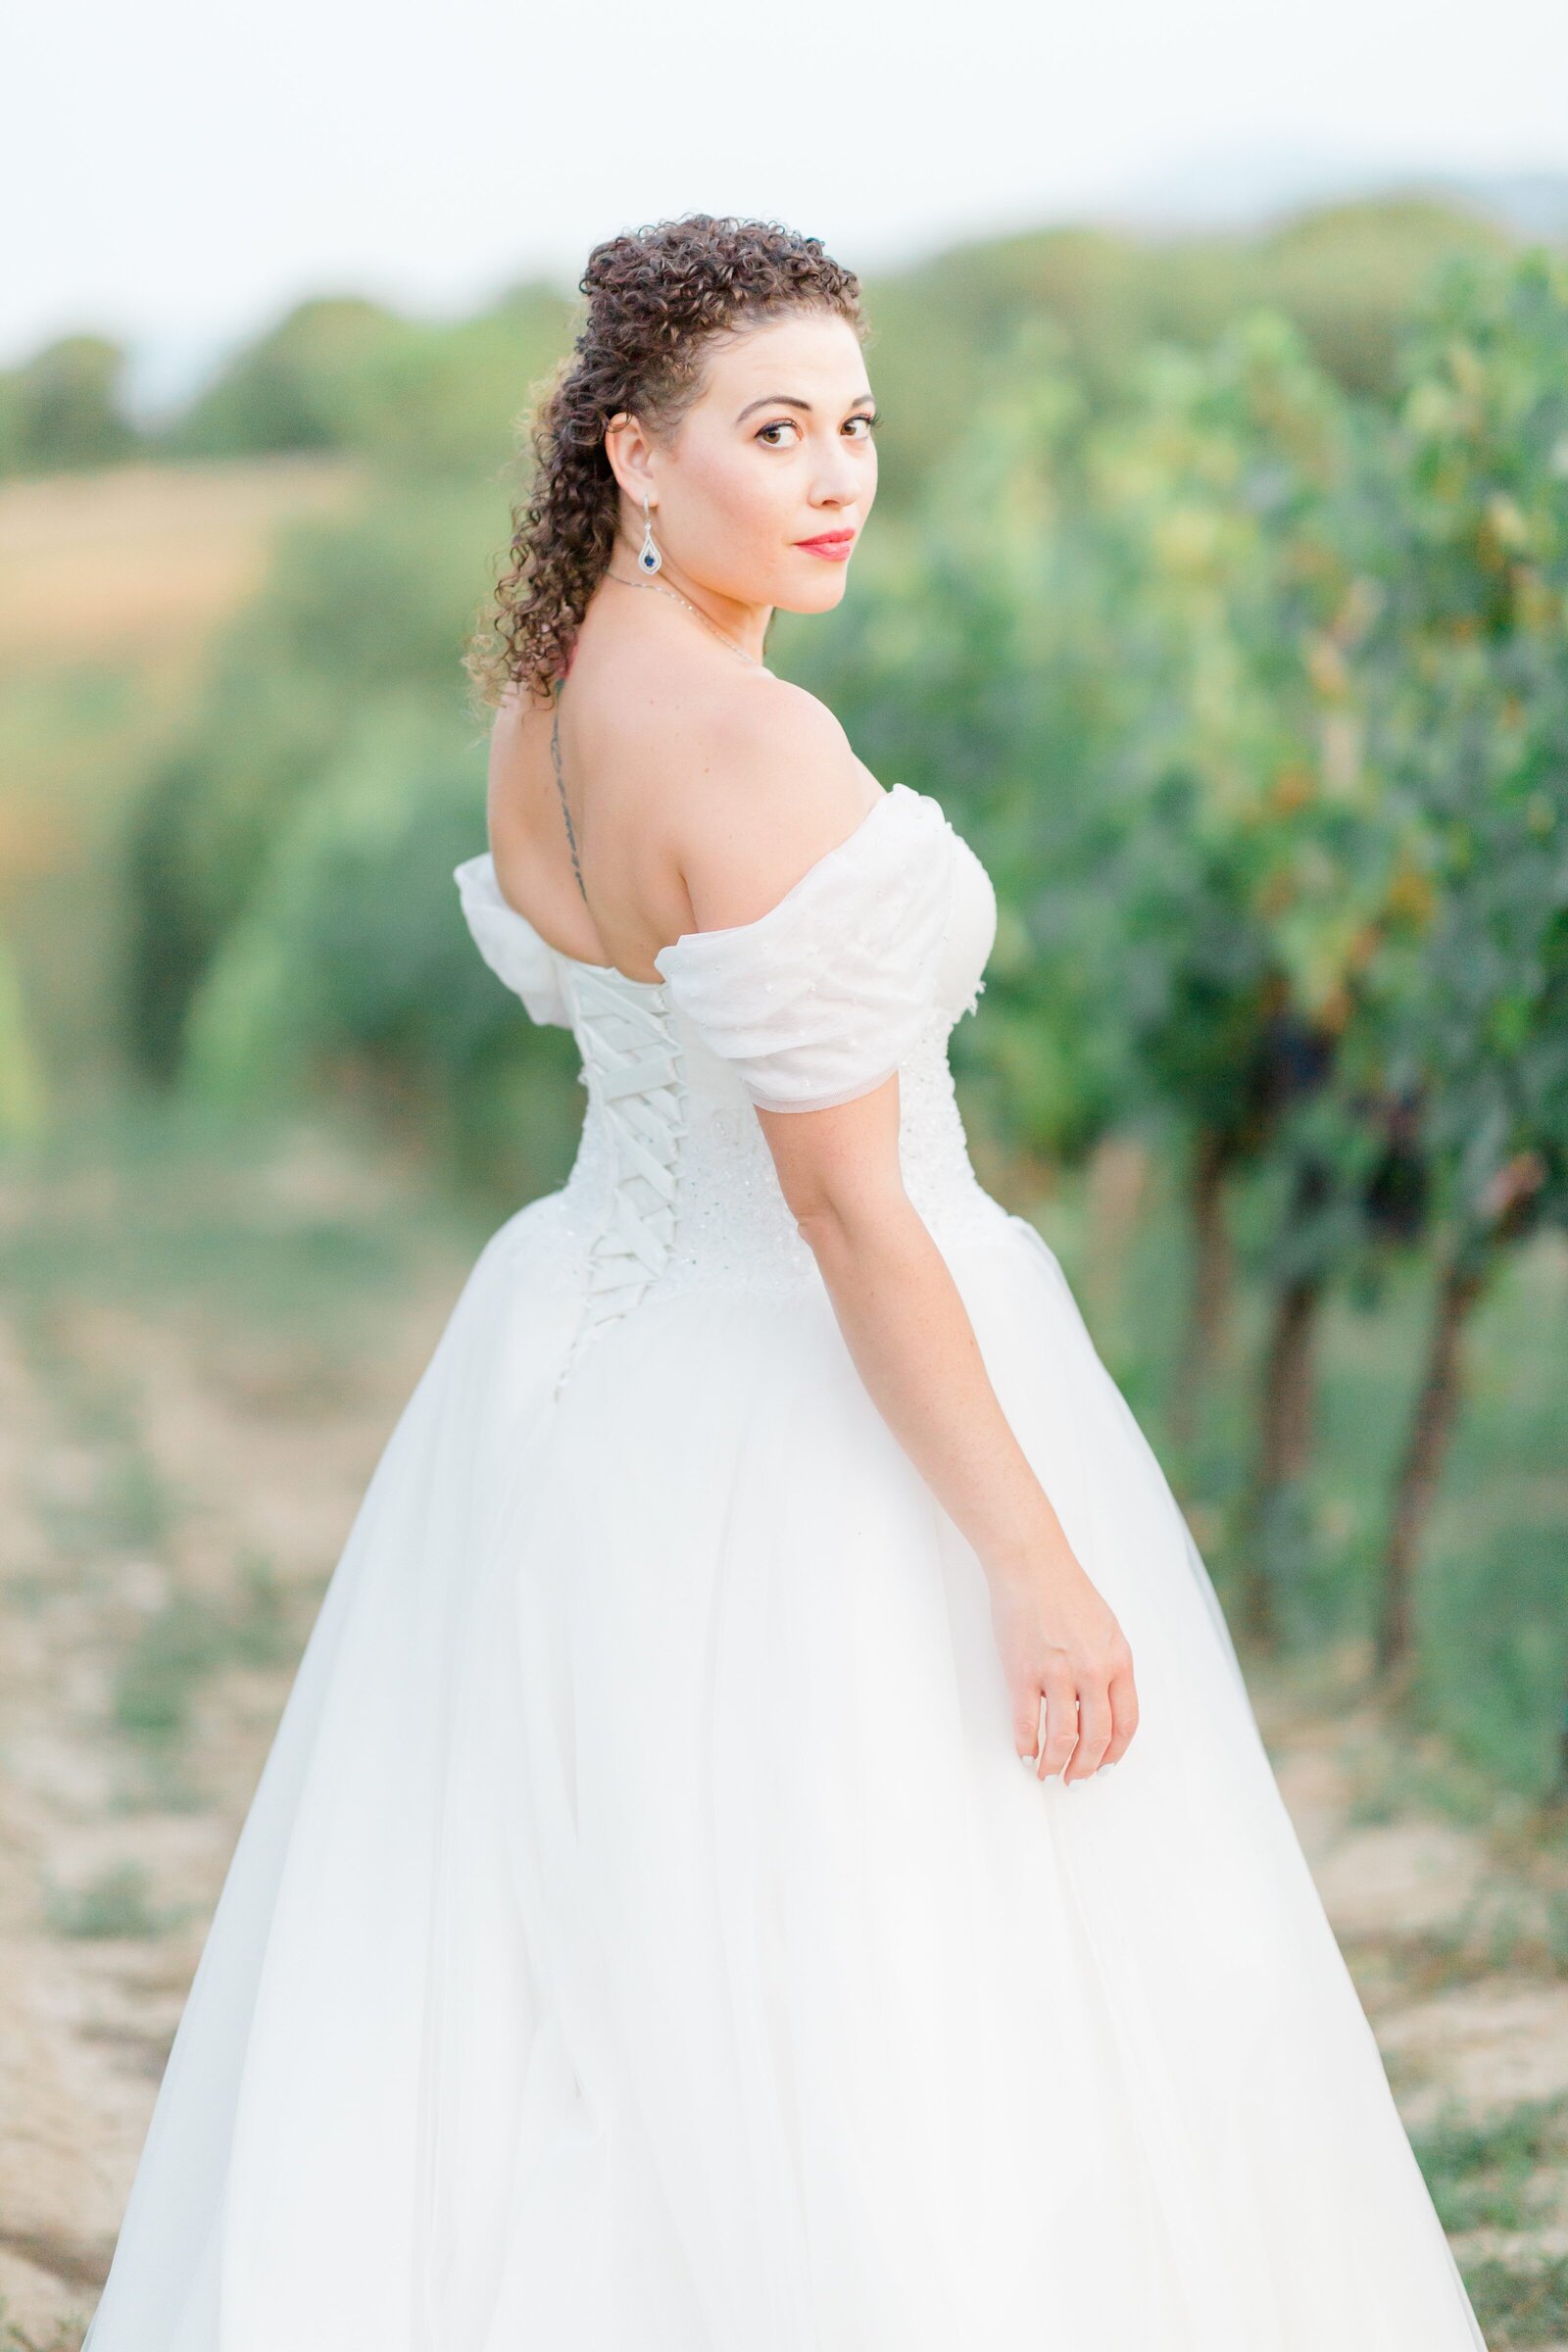 erica-lauren-photography-stacey-lance-tuscany-italy-wedding-sept-05-2020-296